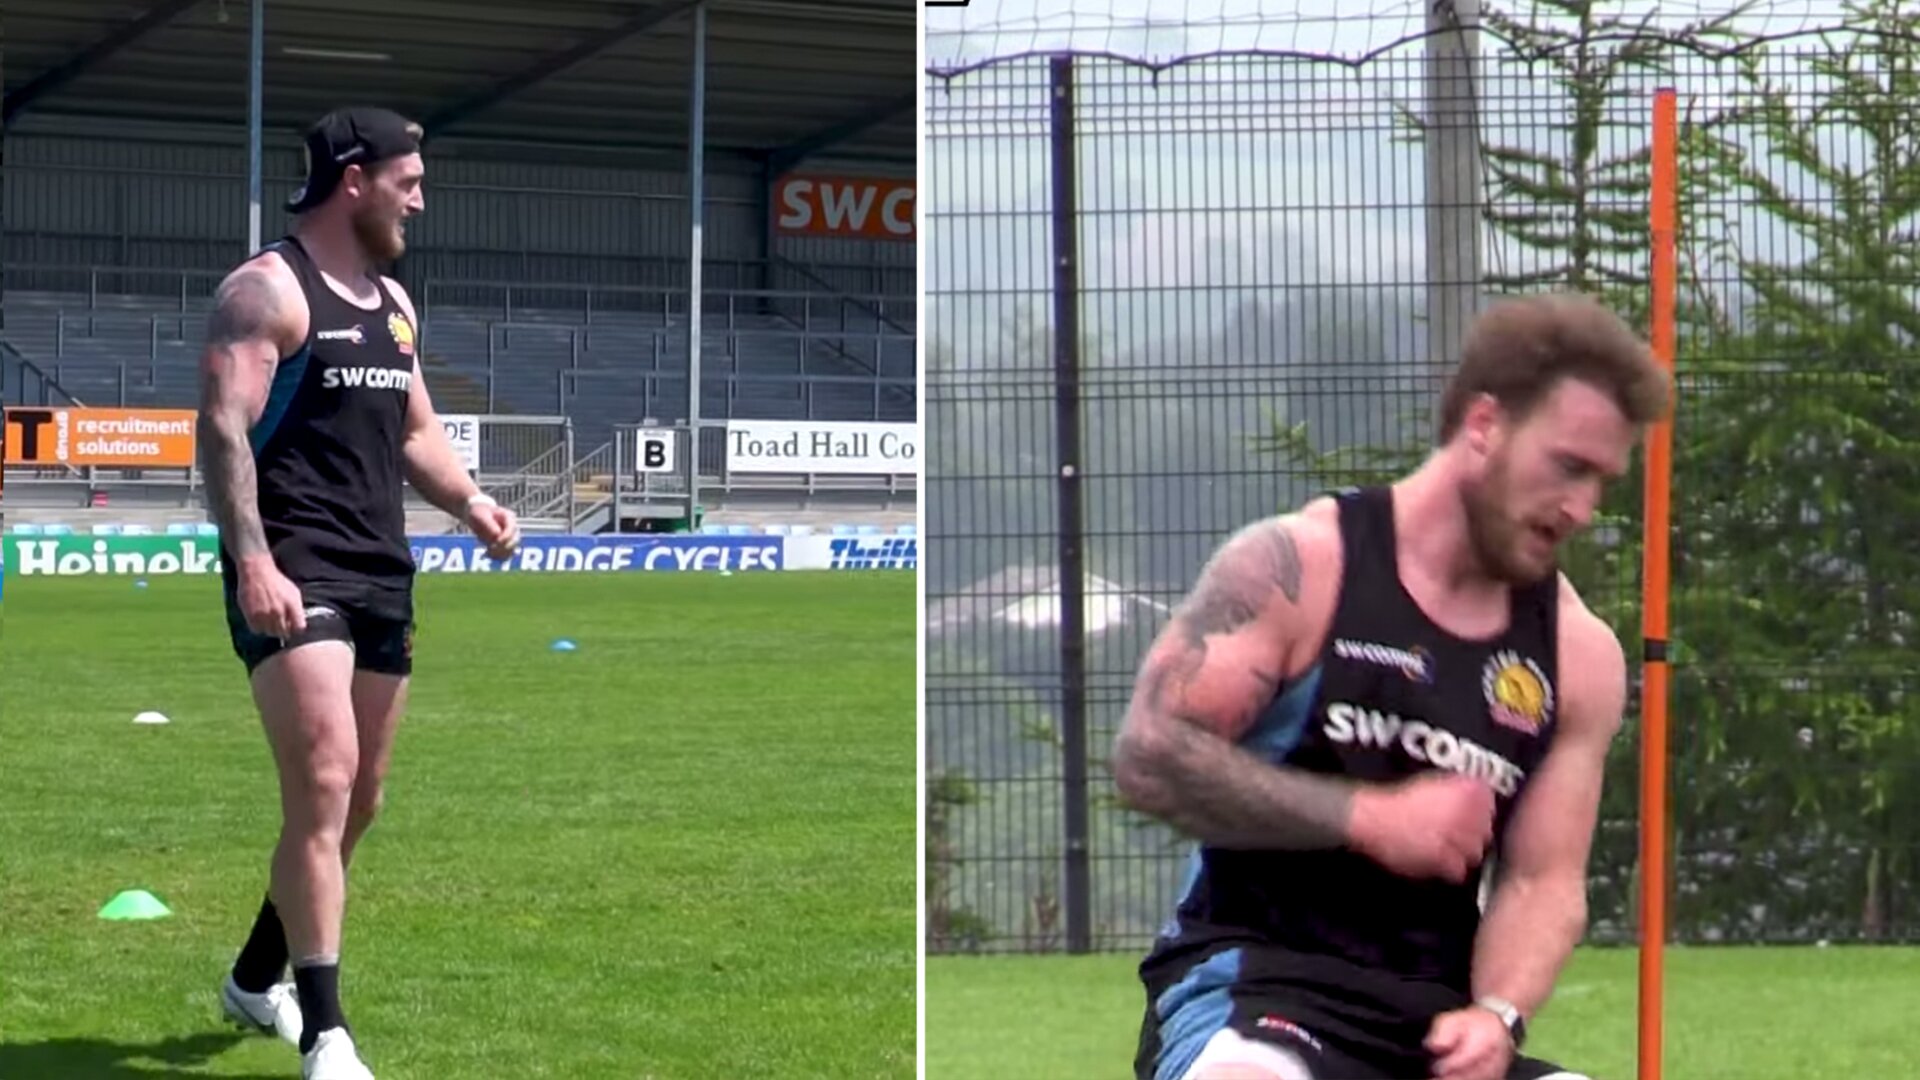 Scotland star Stuart Hogg has undergone a body transformation during lockdown